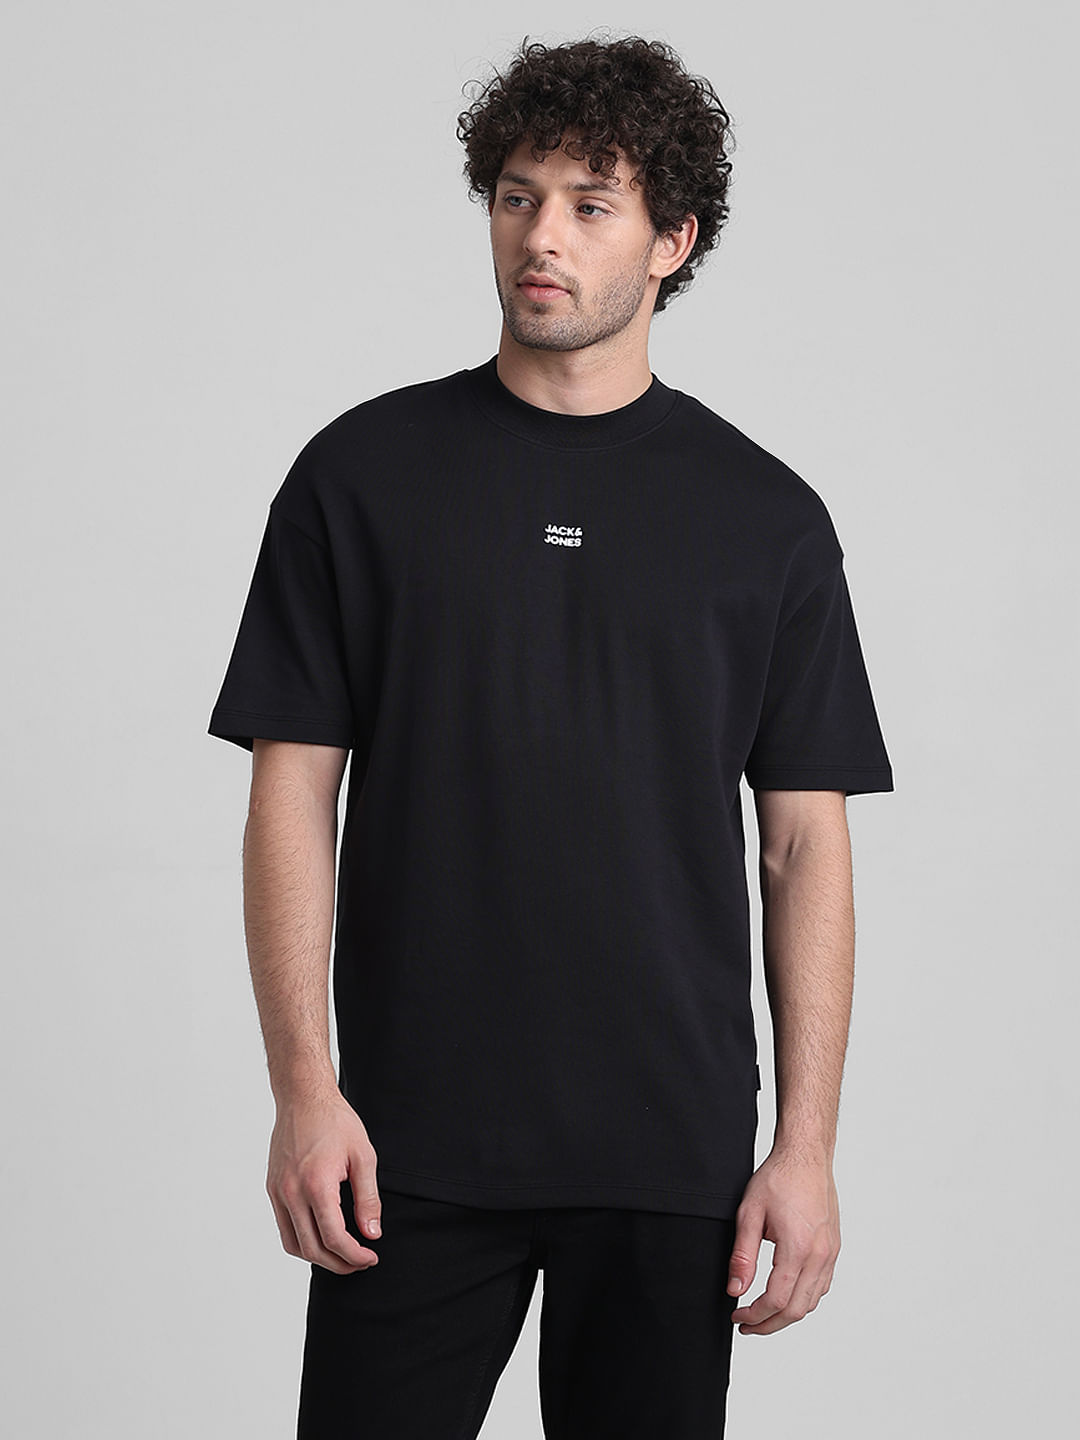 Black Graphic Printed Oversized T-shirt|235287001-Jet-Black